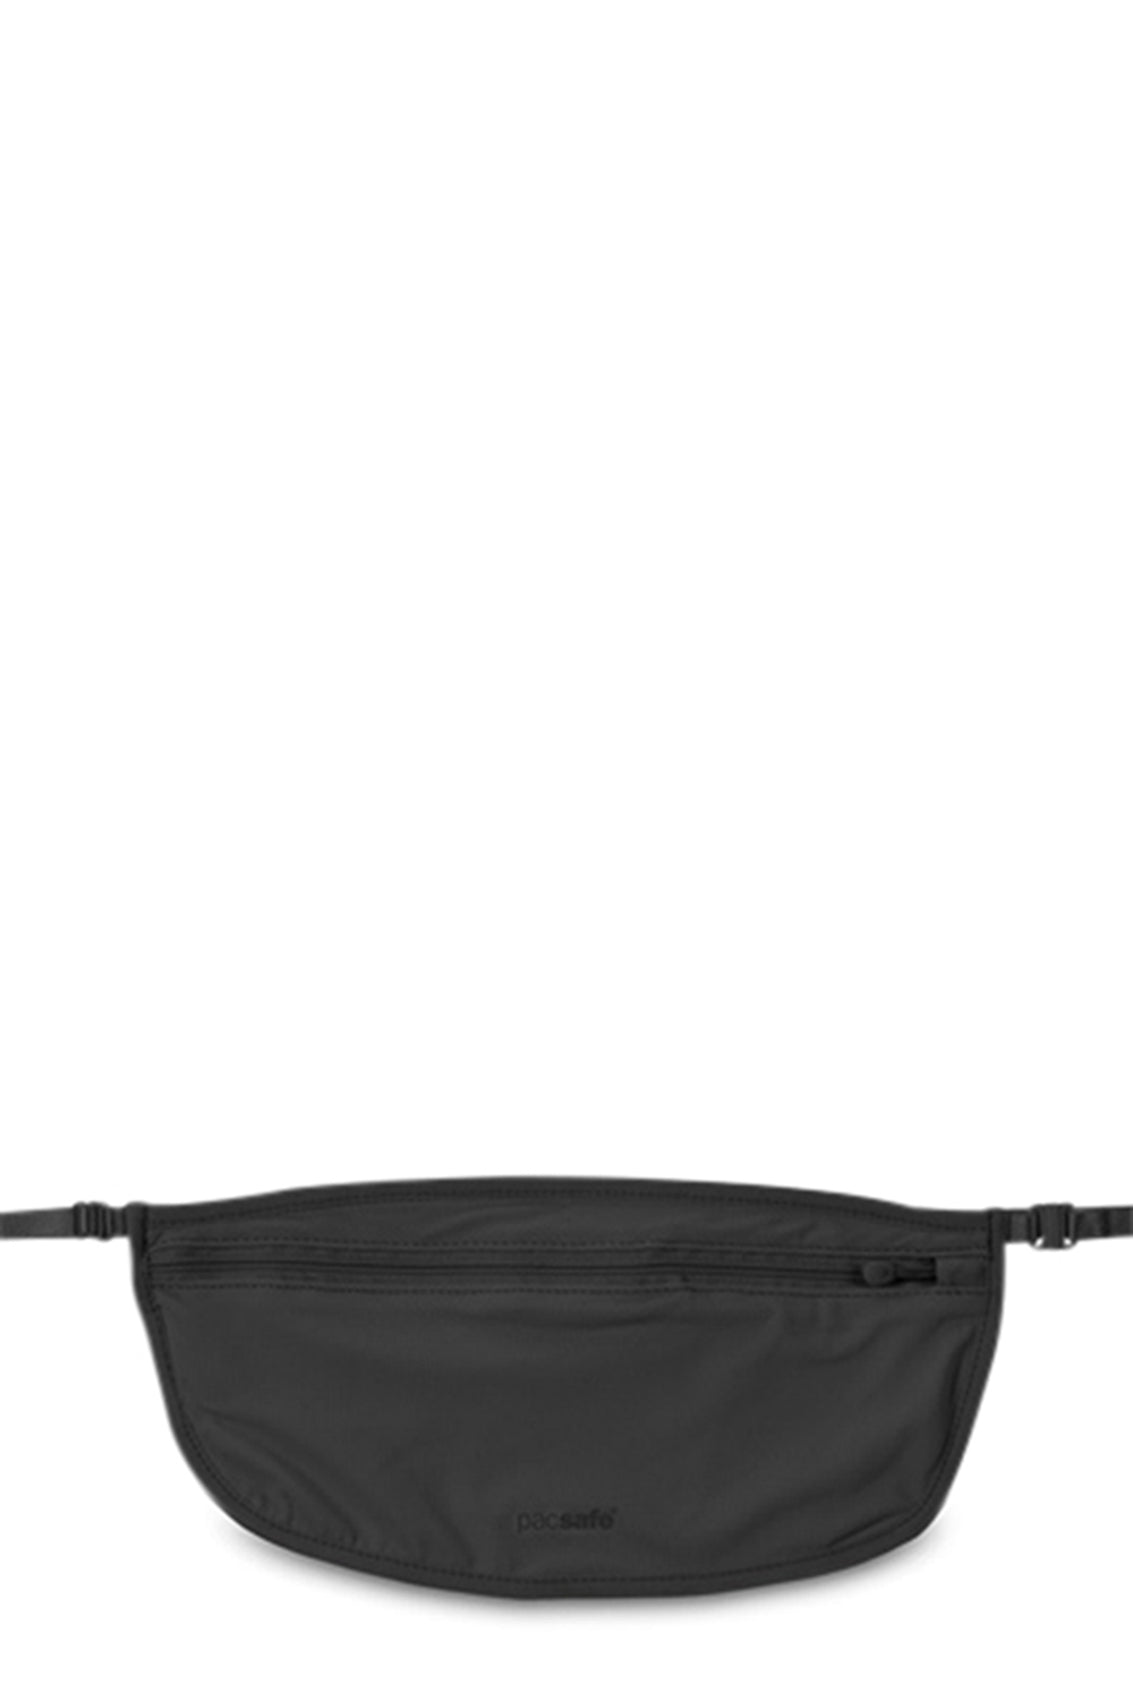 Pacsafe Coversafe S100 Secret Waist Pouch Black | Luggage.co.nz